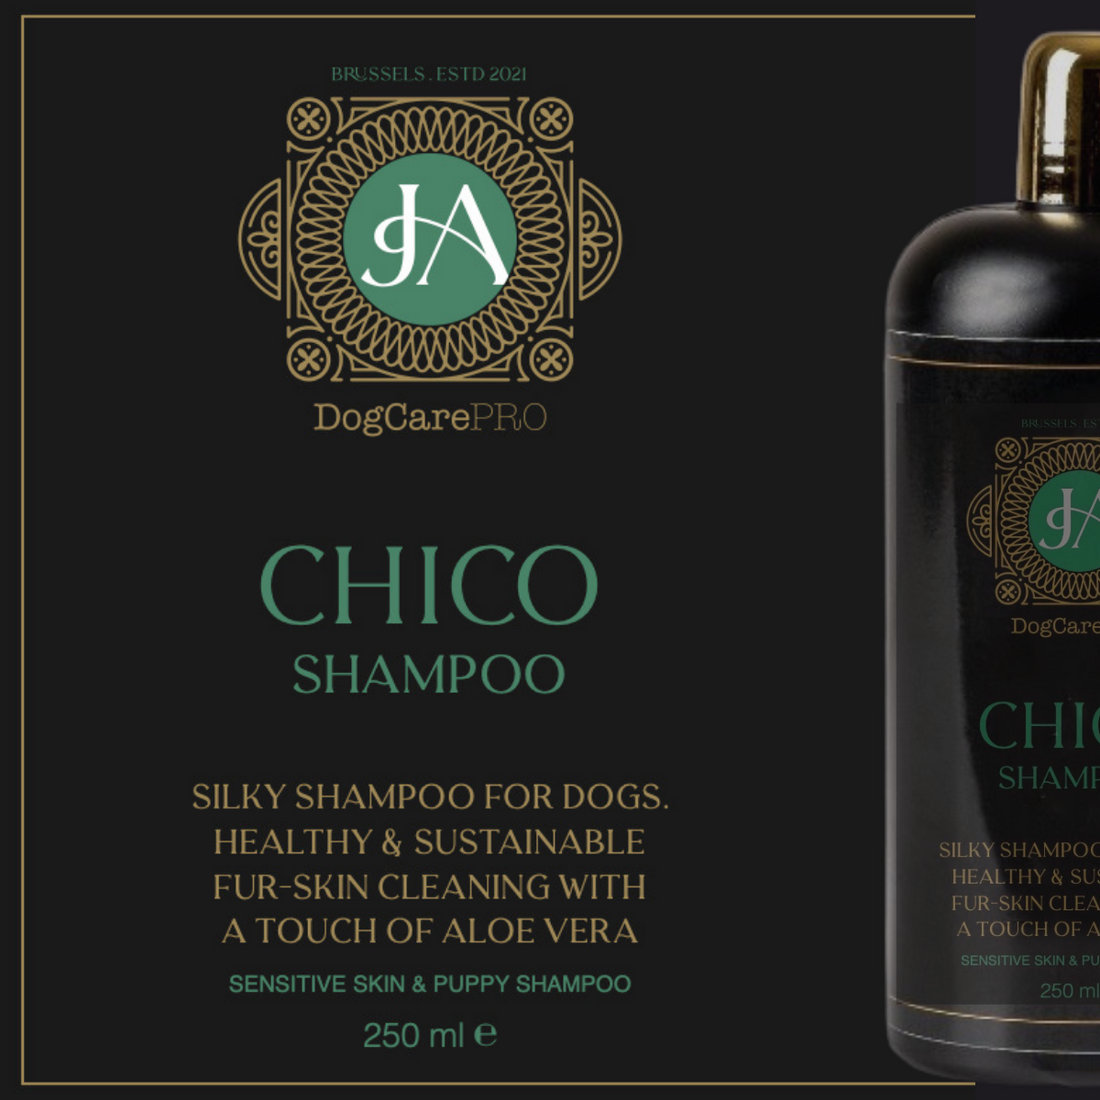 CHICO Shampoo for sensitive skin & puppies